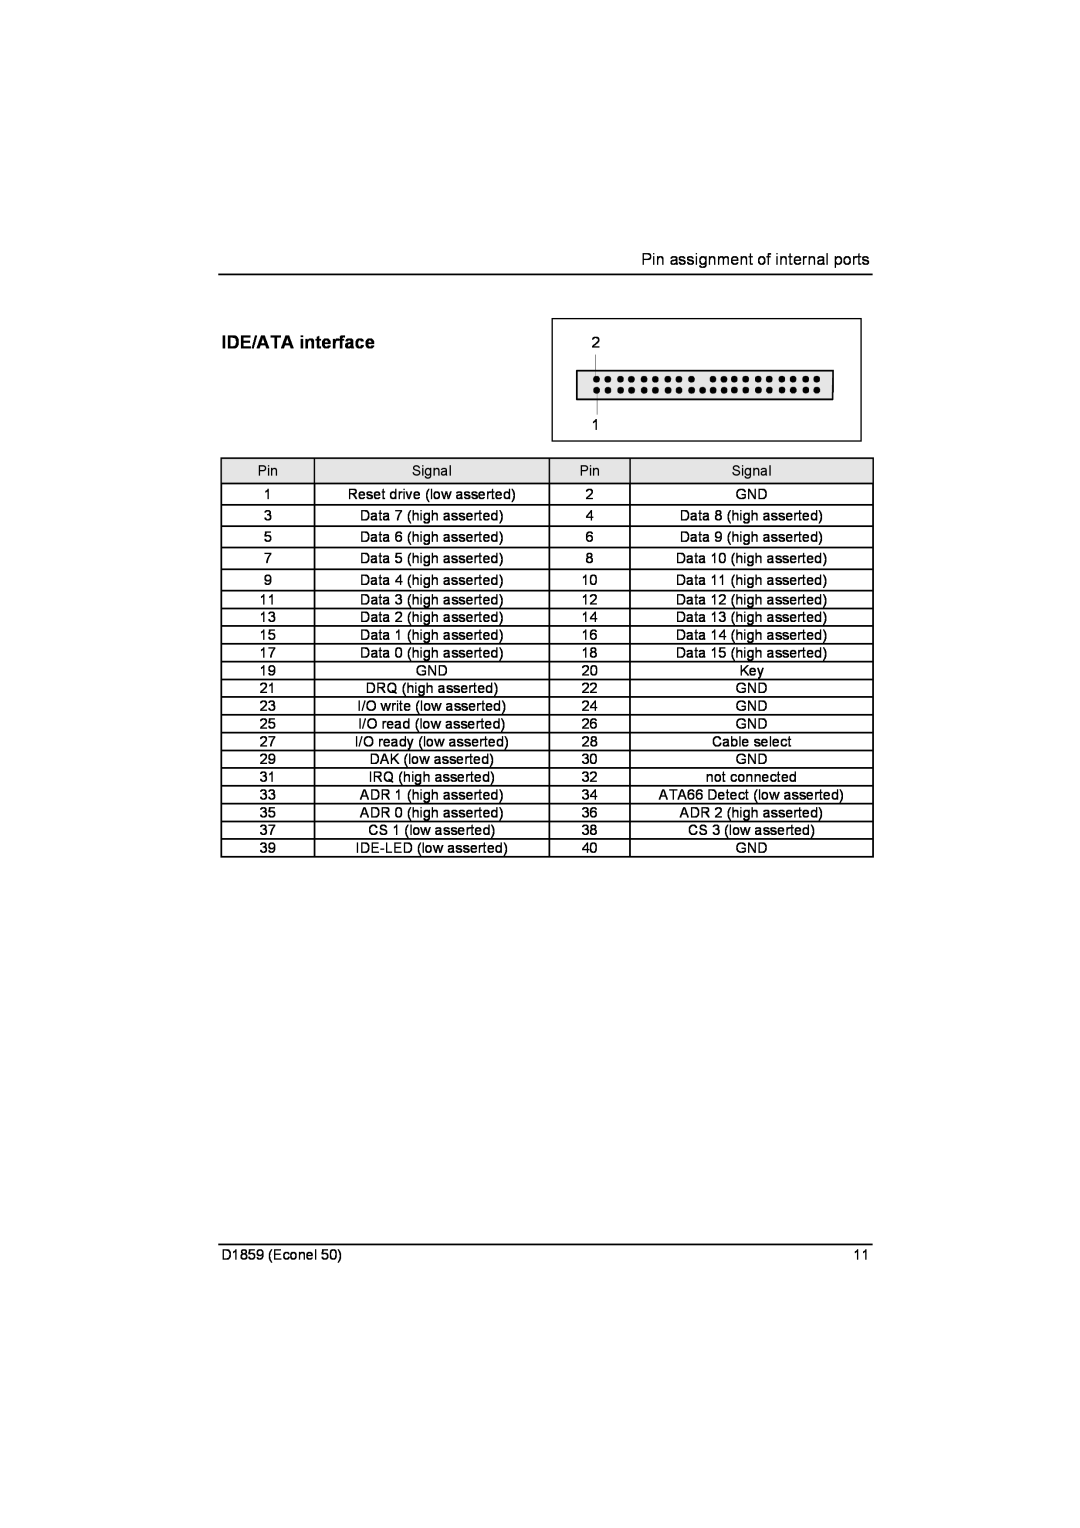 Fujitsu D1859 technical manual IDE/ATA interface, Pin assignment of internal ports 